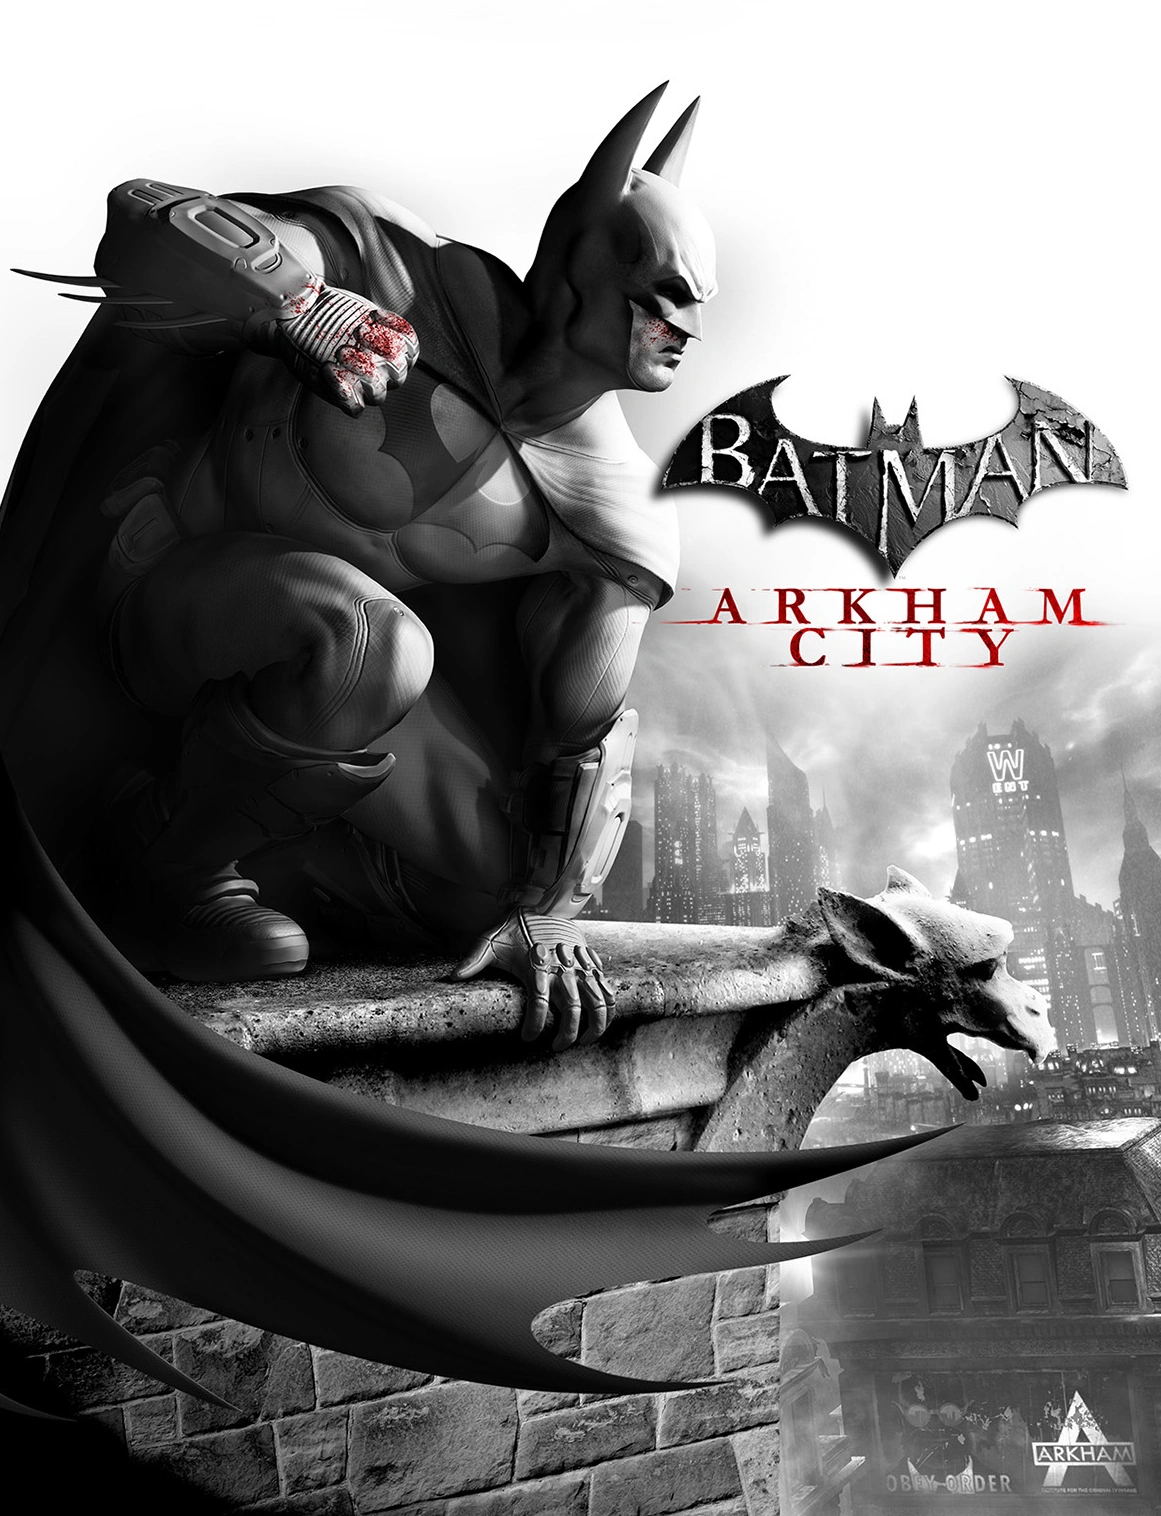 when was batman arkham asylum released